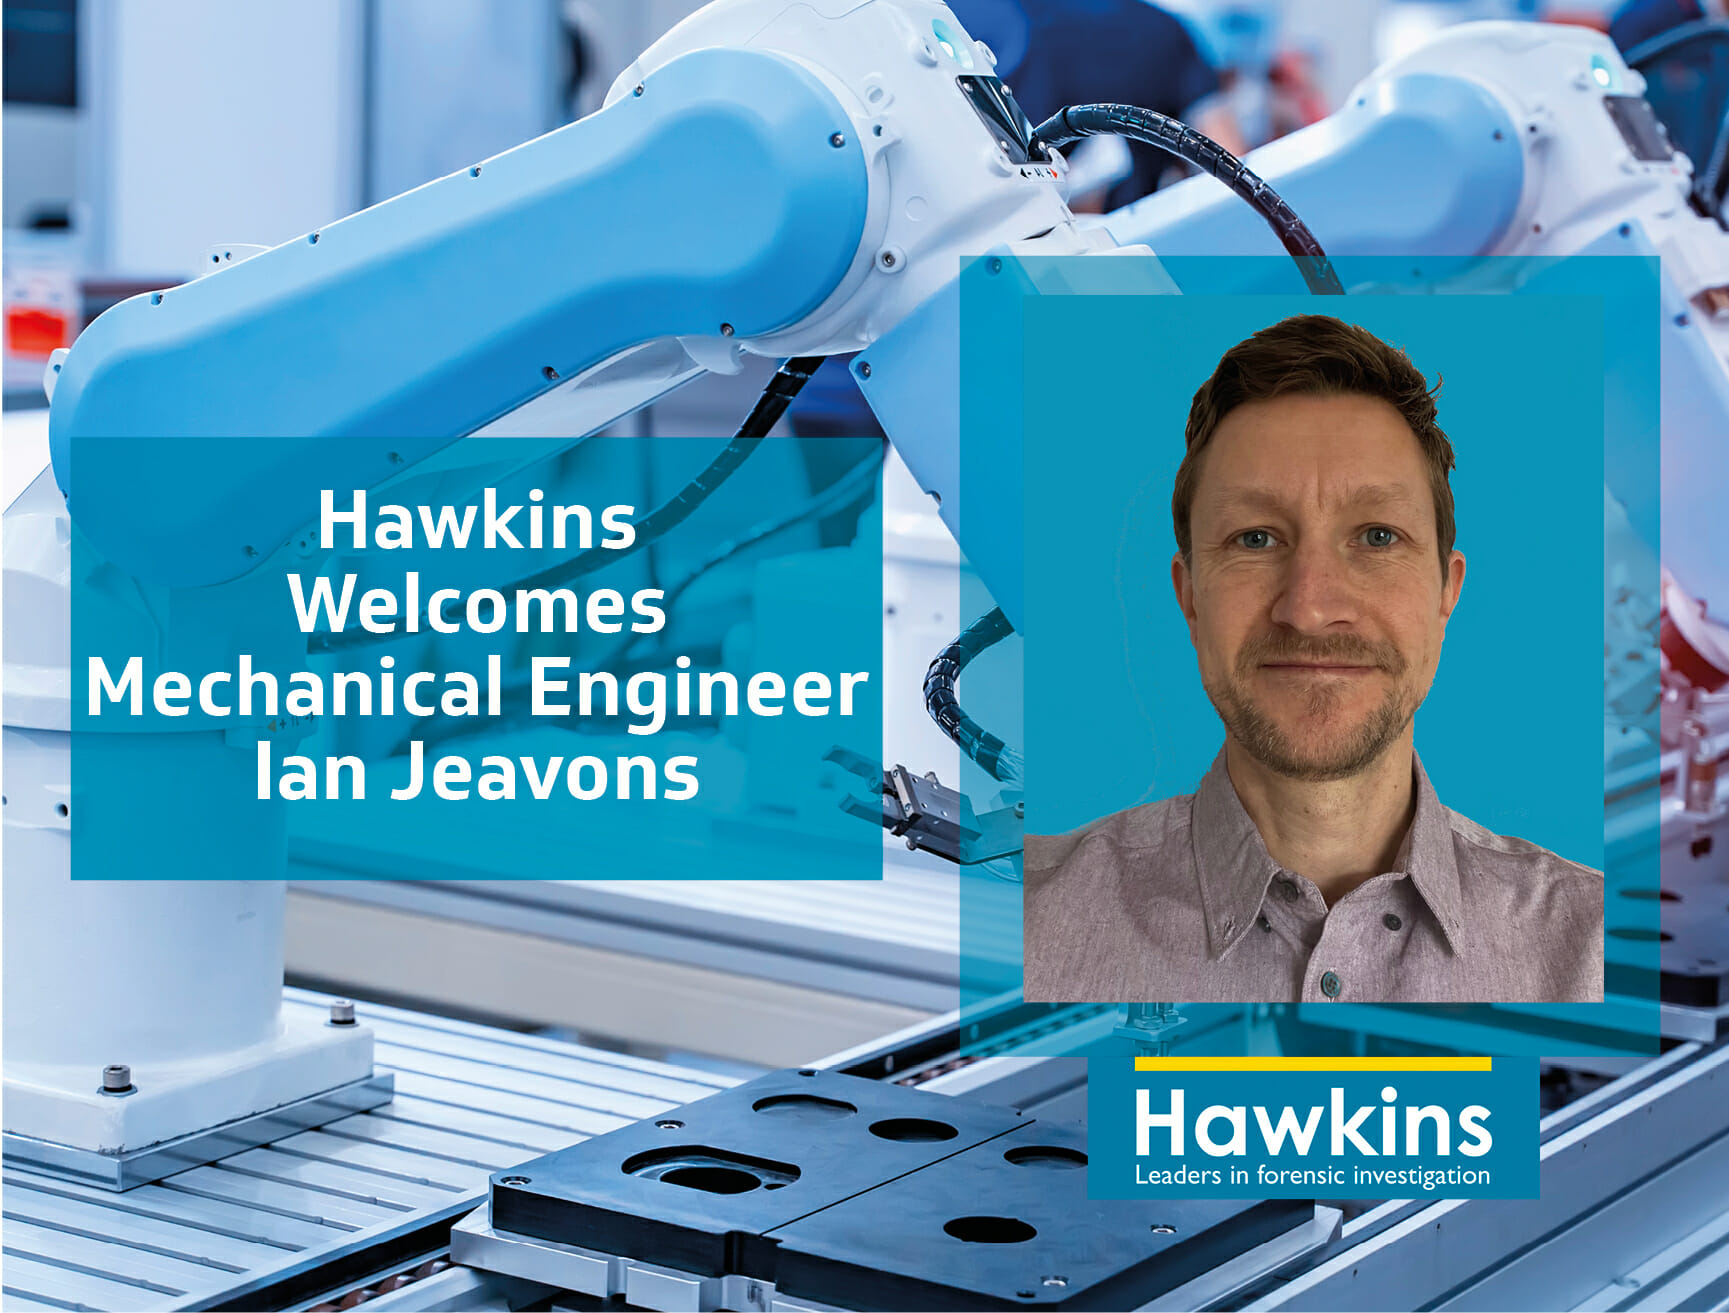 Hawkins Welcomes Ian Jeavons